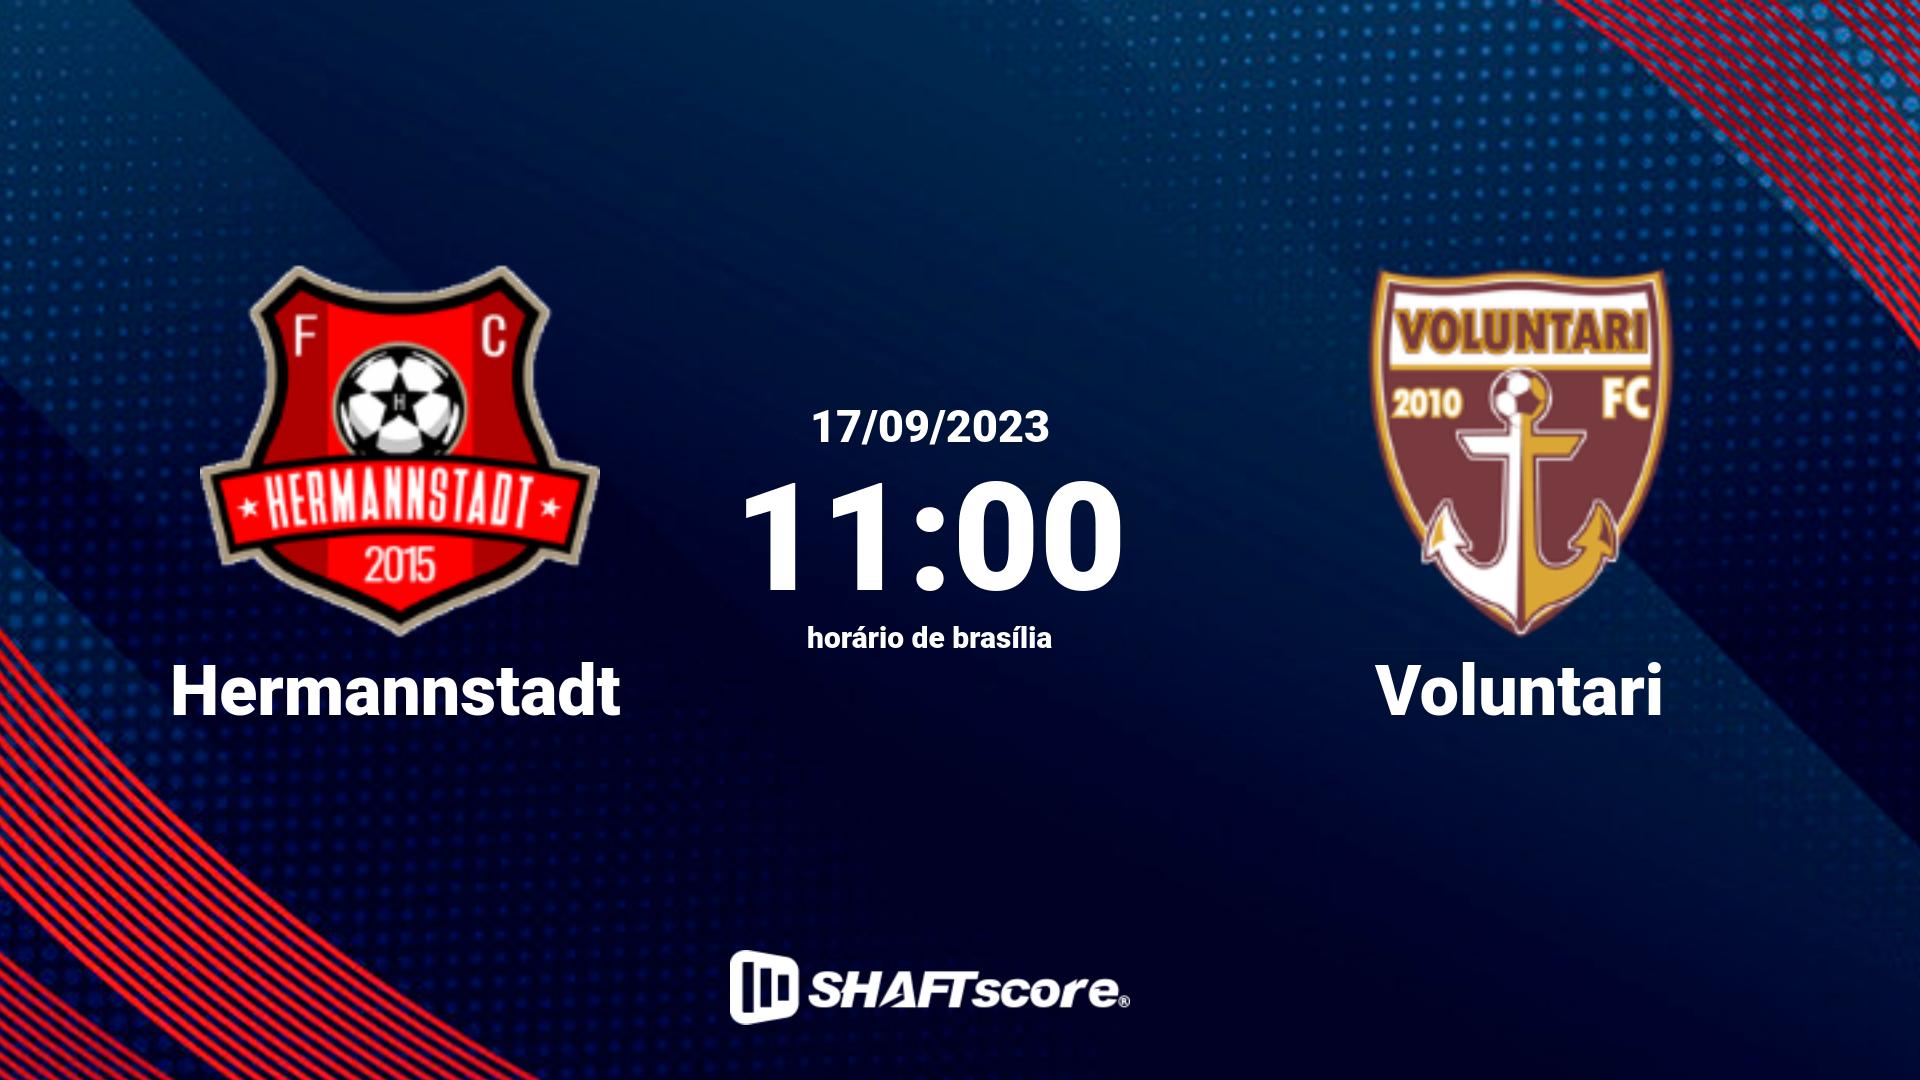 Estatísticas do jogo Hermannstadt vs Voluntari 17.09 11:00